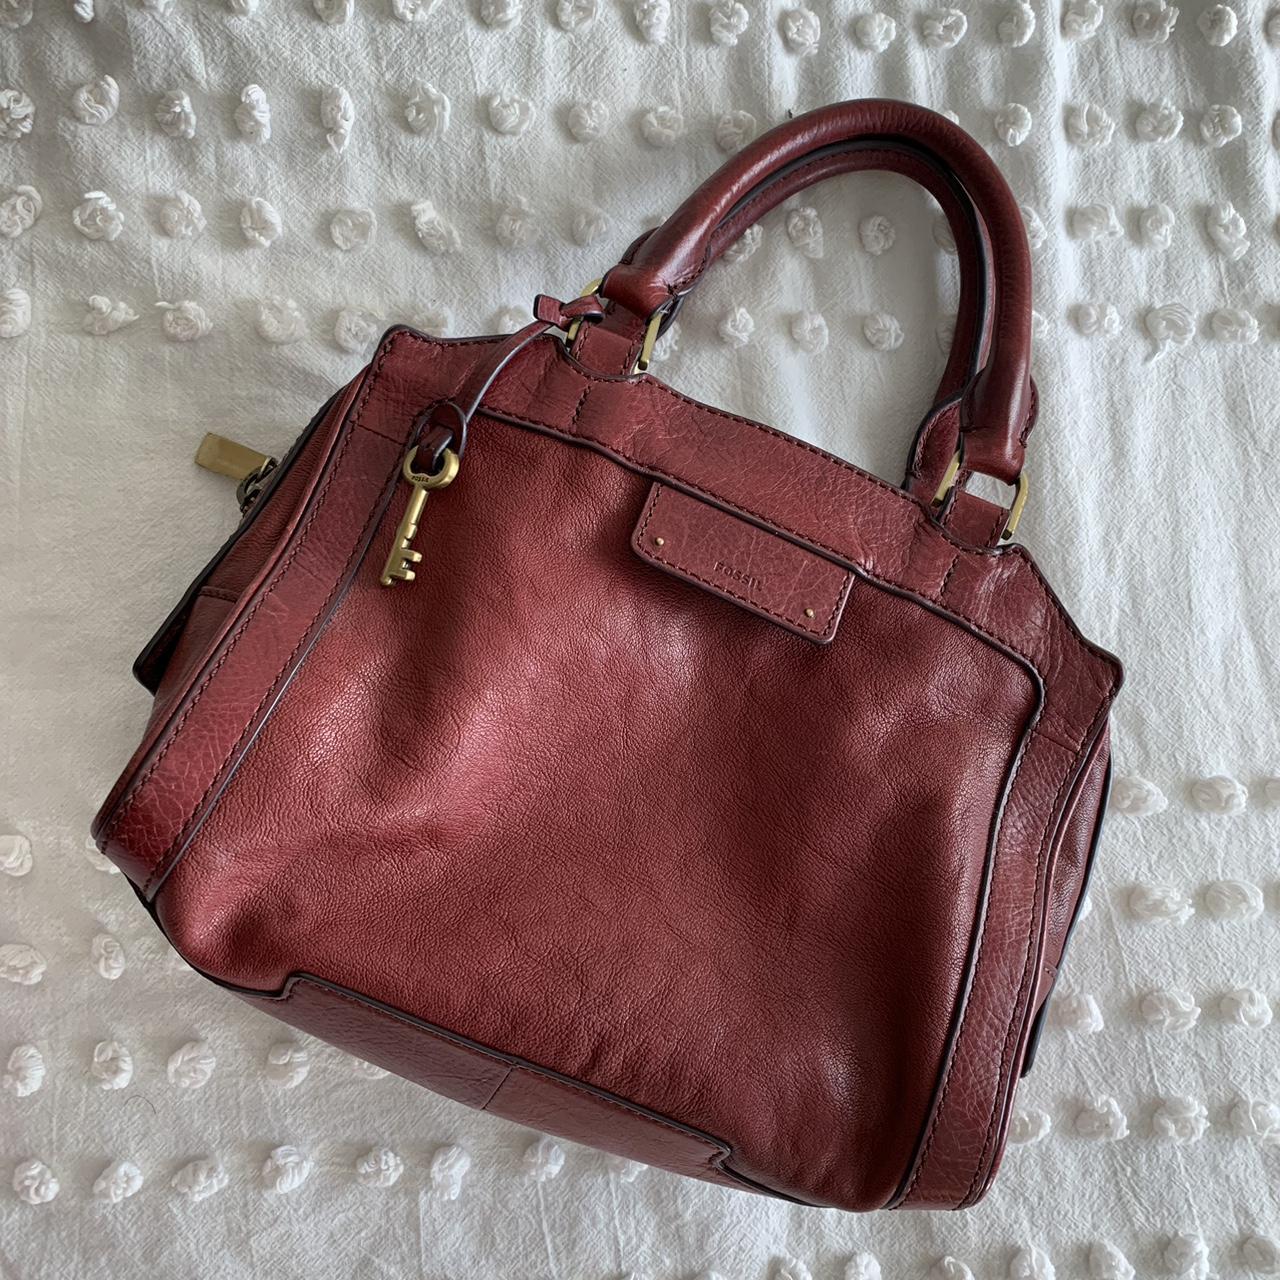 Vintage fossil burgundy handbag - Gem